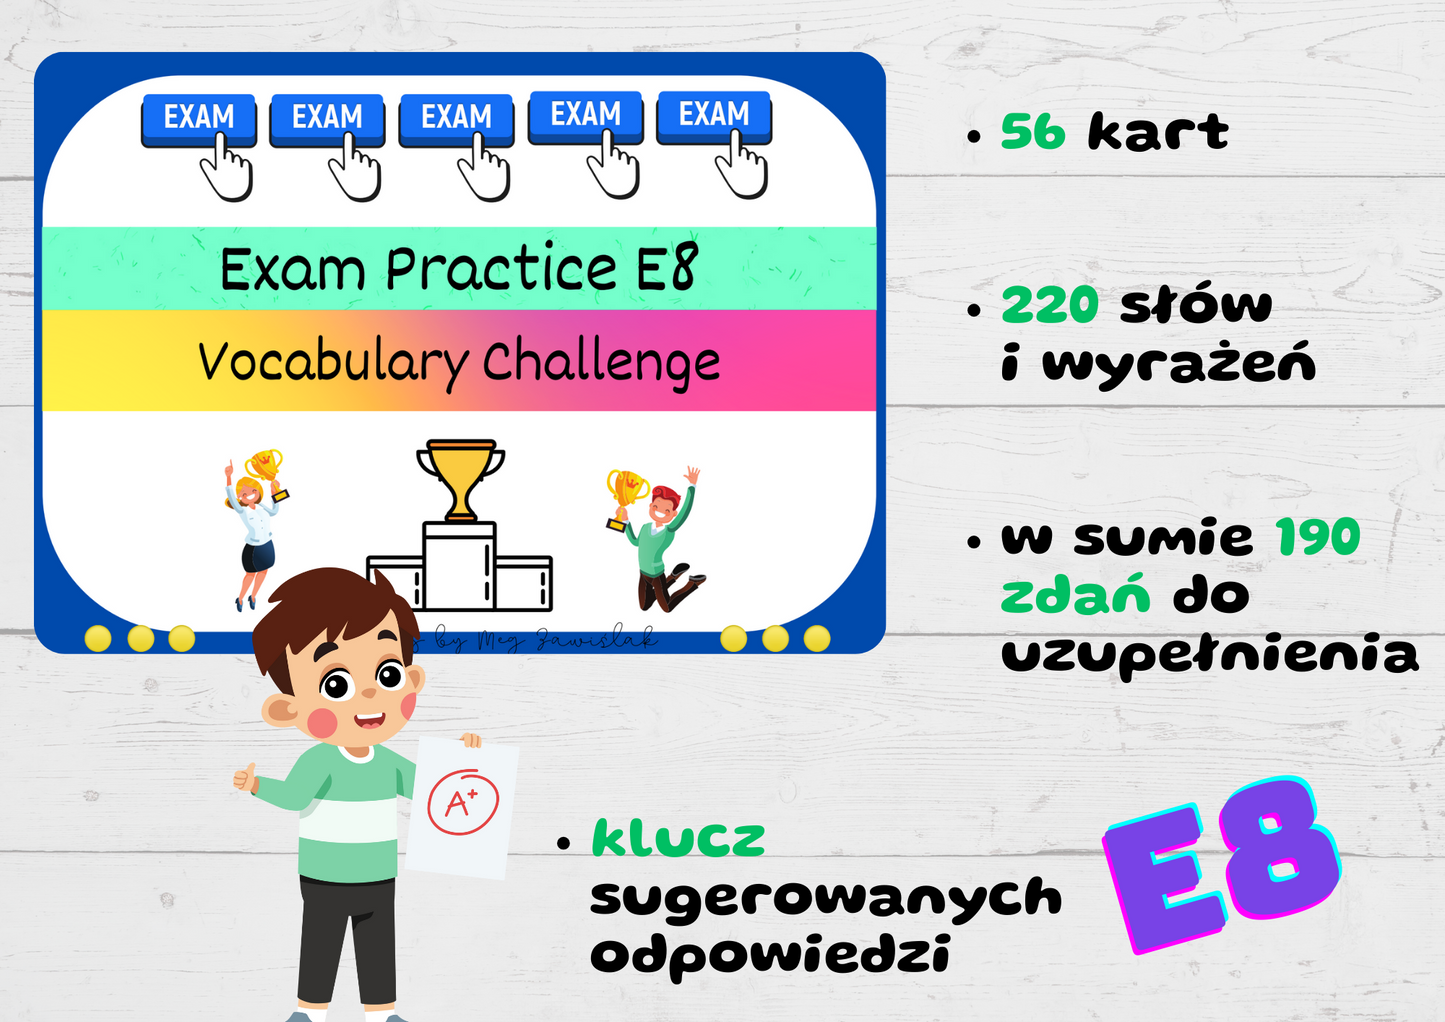 Greatcards - Exam Practice E8 Vocabulary Challenge